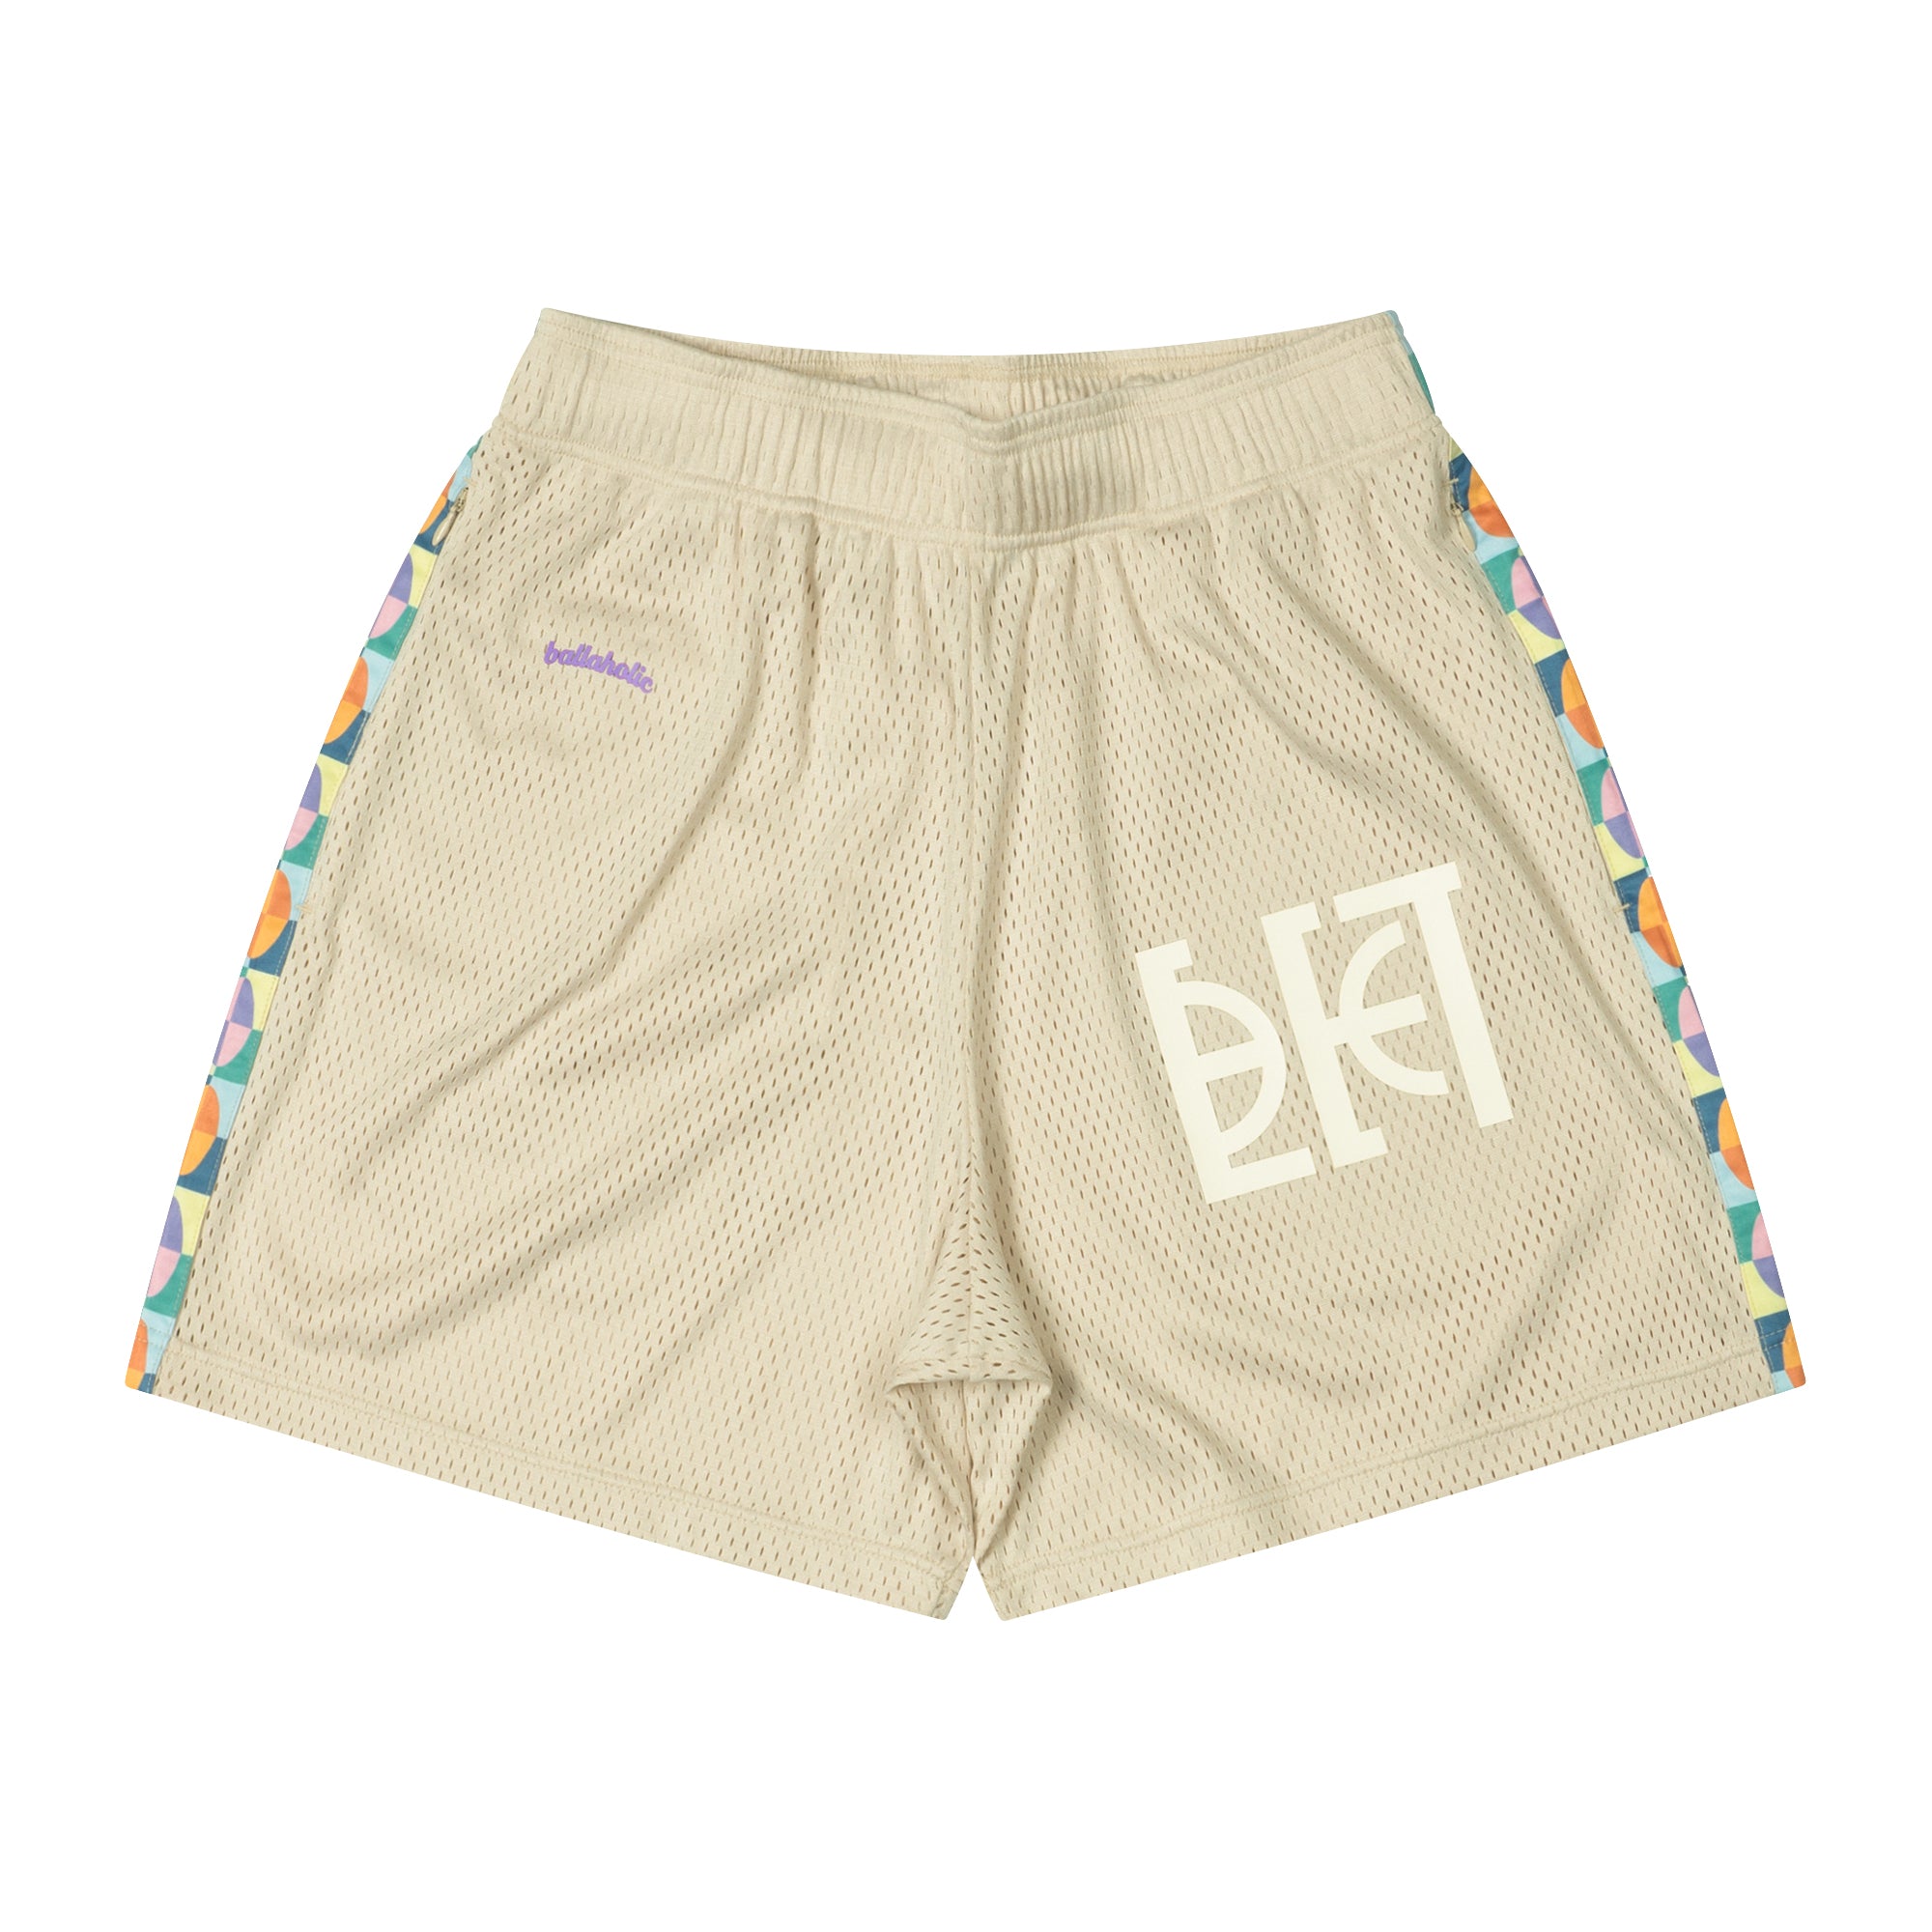 ballaholic mesh zip shorts beige-